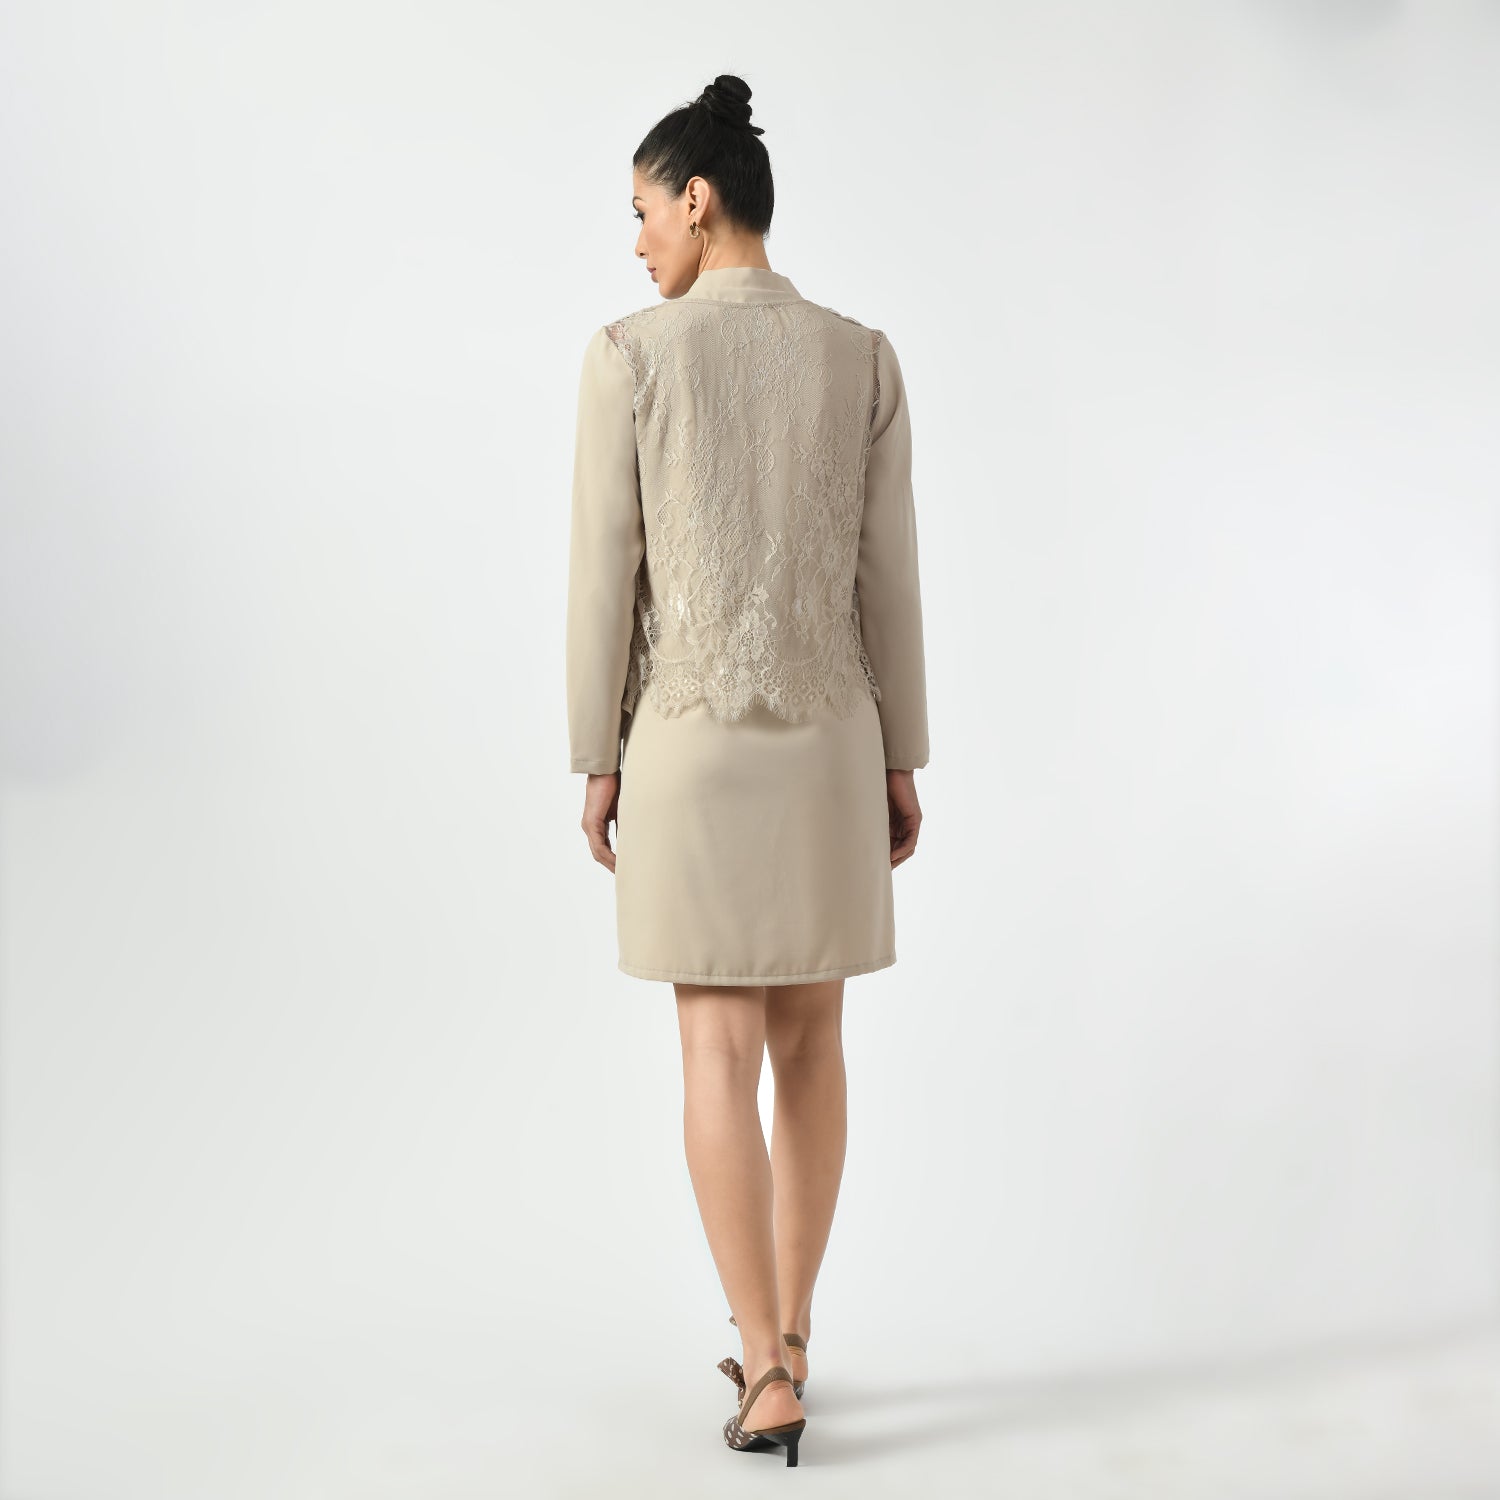 Light Beige Asymmetrical Short Lace Jacket